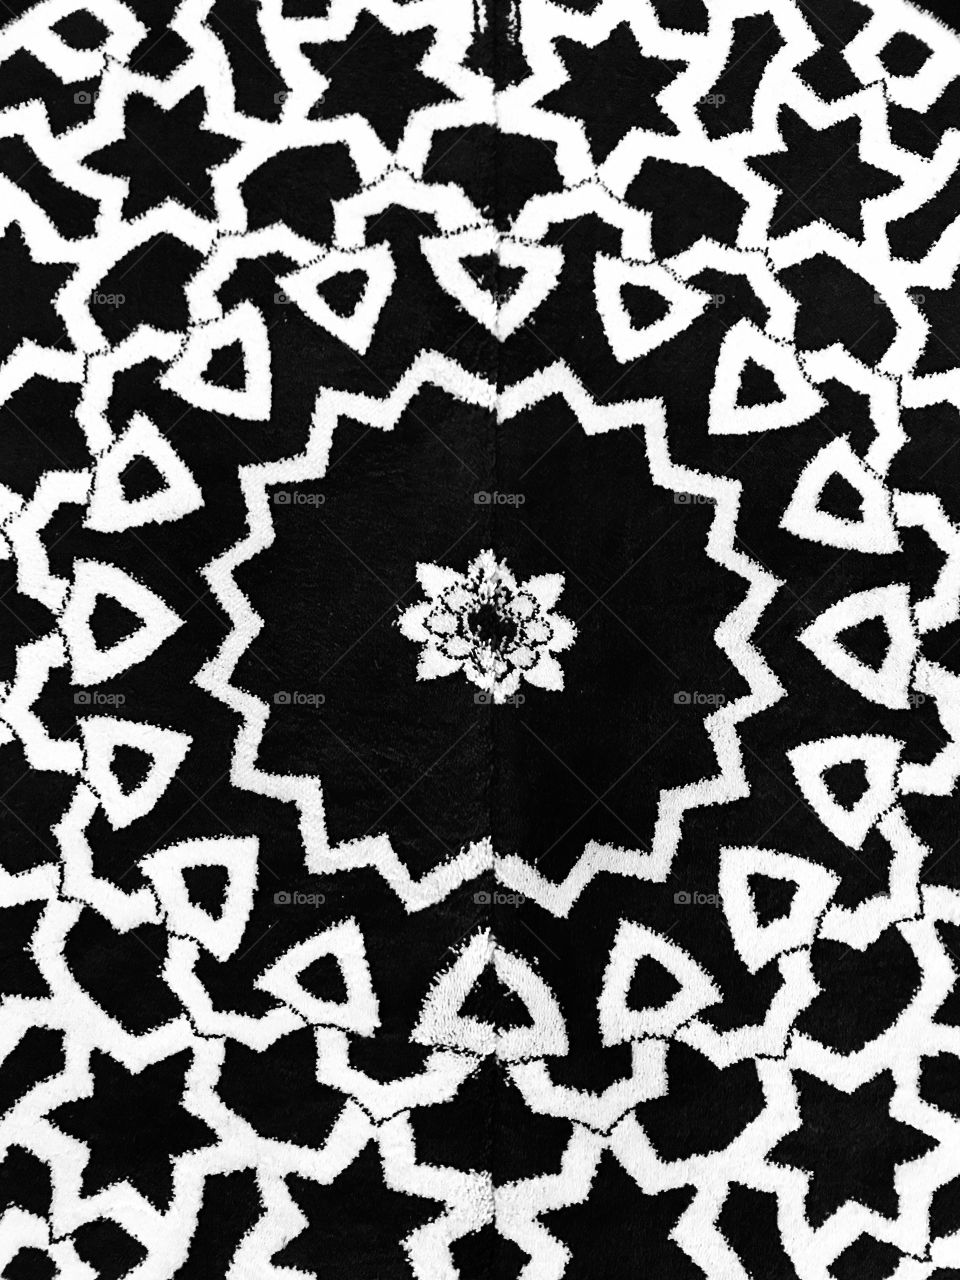 Black and white geometric design